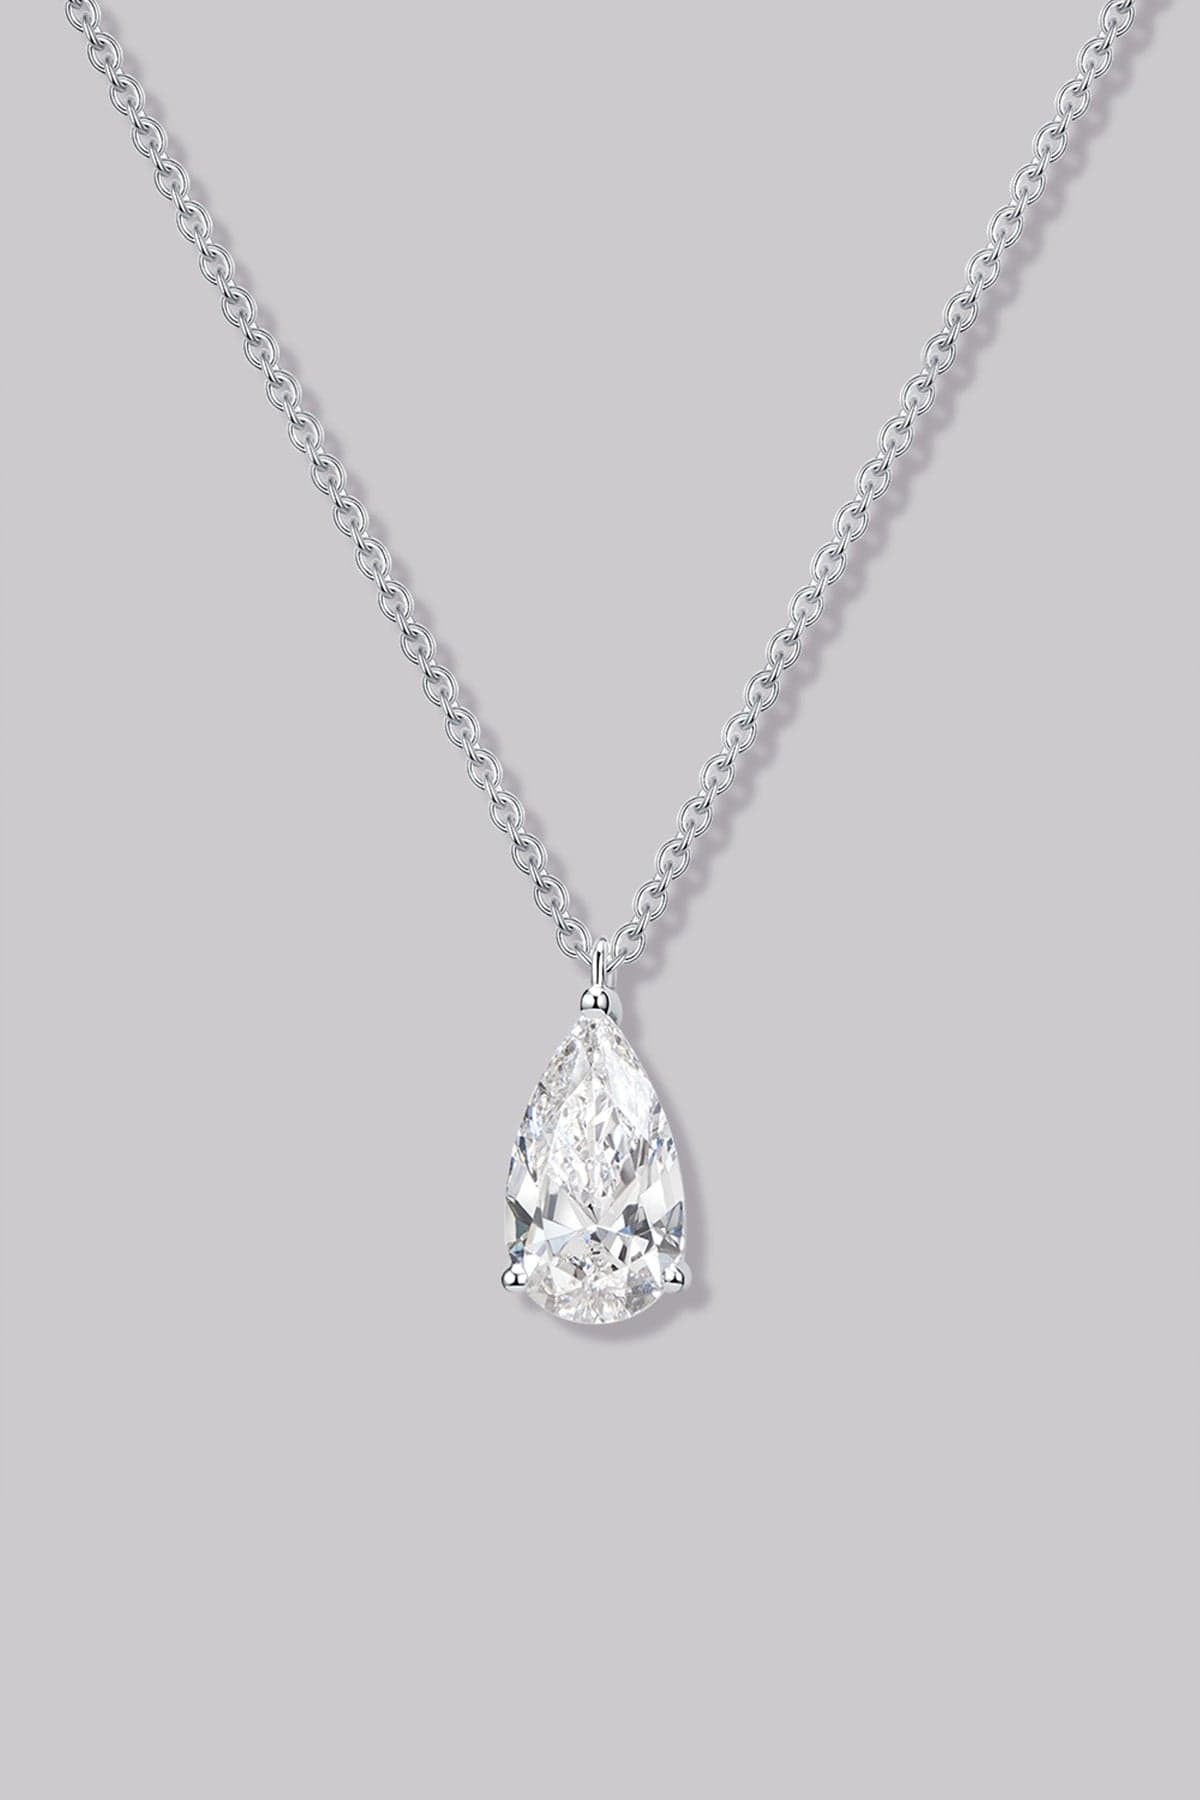 Solitaire Pear Diamond Necklace (1ct) - APM Monaco